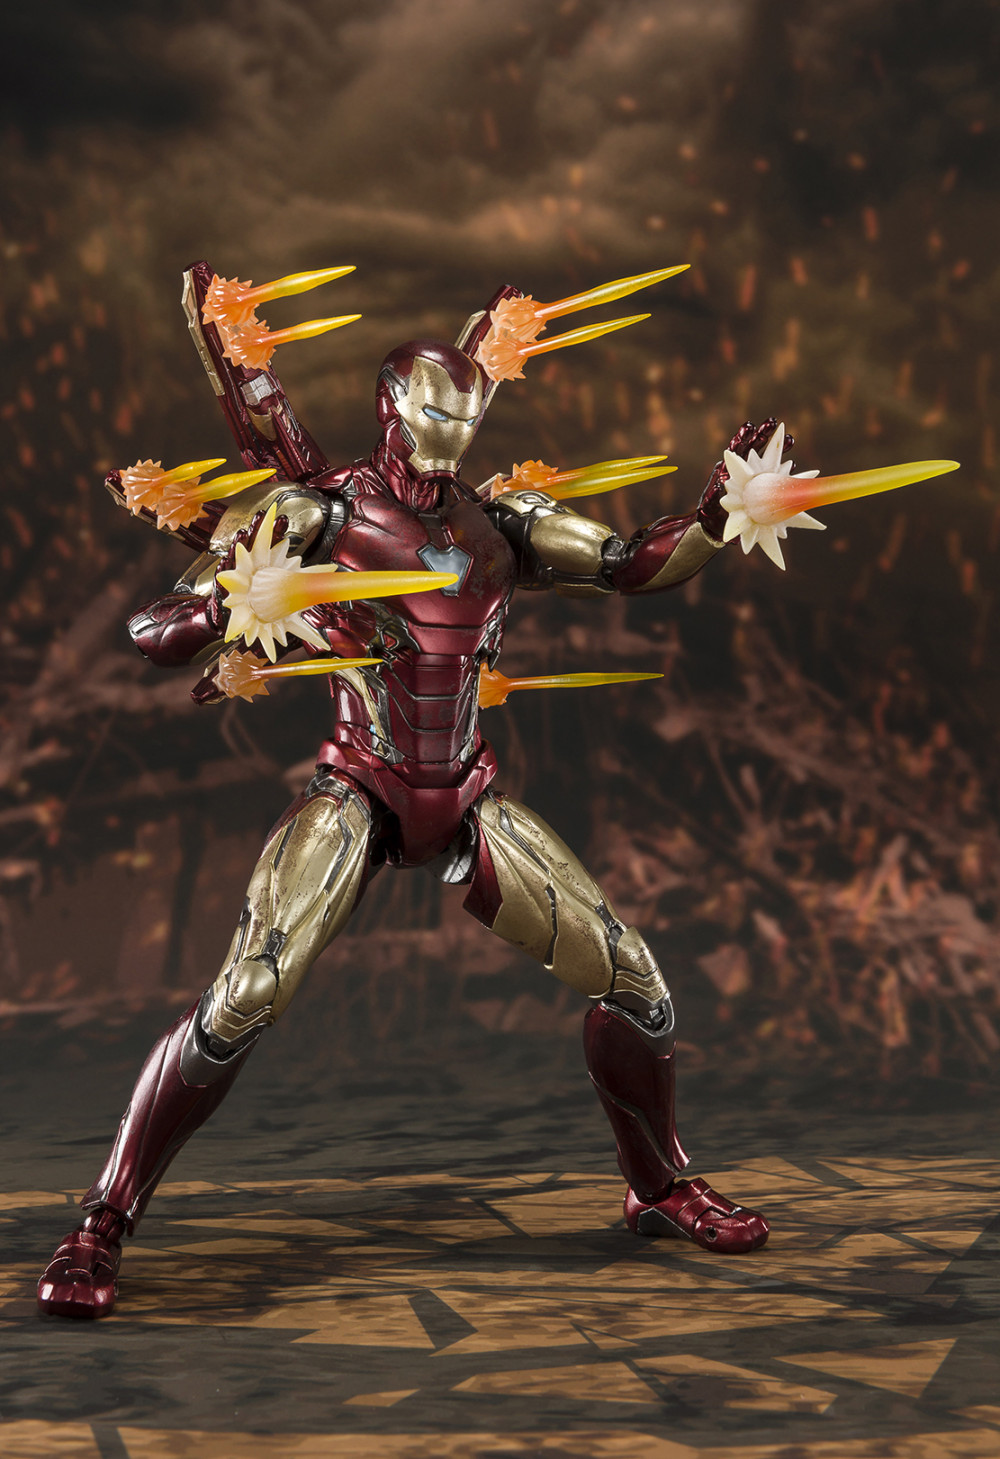  Avengers: Endgame  Iron Man Mark 85 Final Battle Edition S.H.Figuarts (16)